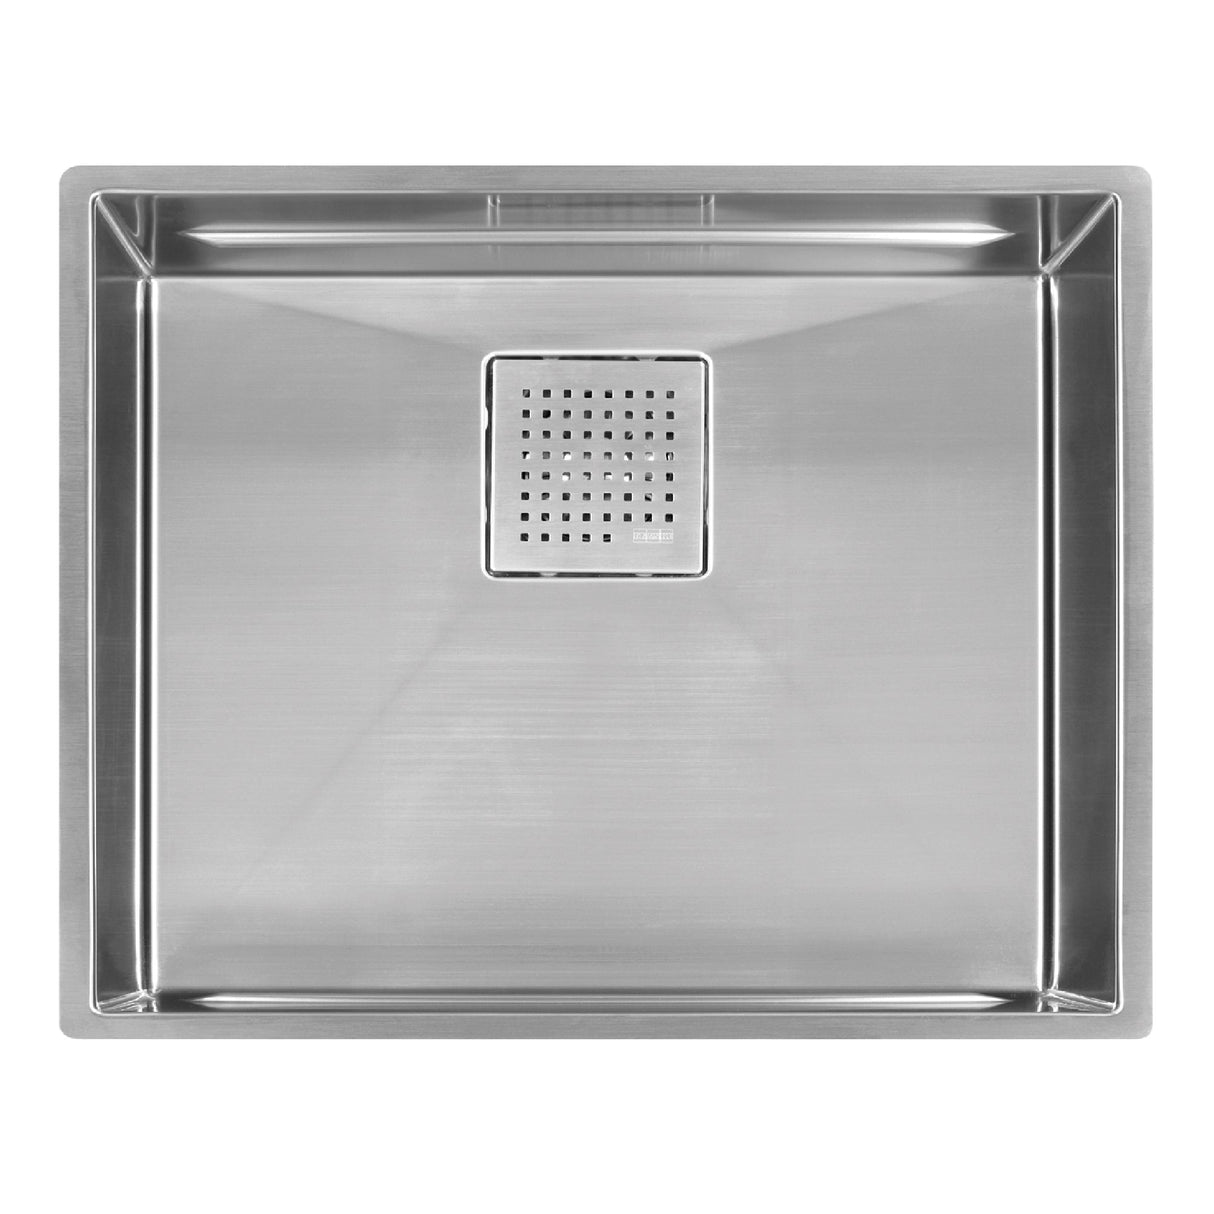 FRANKE PKX11021 Peak 23-in. x 18-in. 16 Gauge Stainless Steel Undermount Single Bowl Kitchen Sink - PKX11021 In Diamond